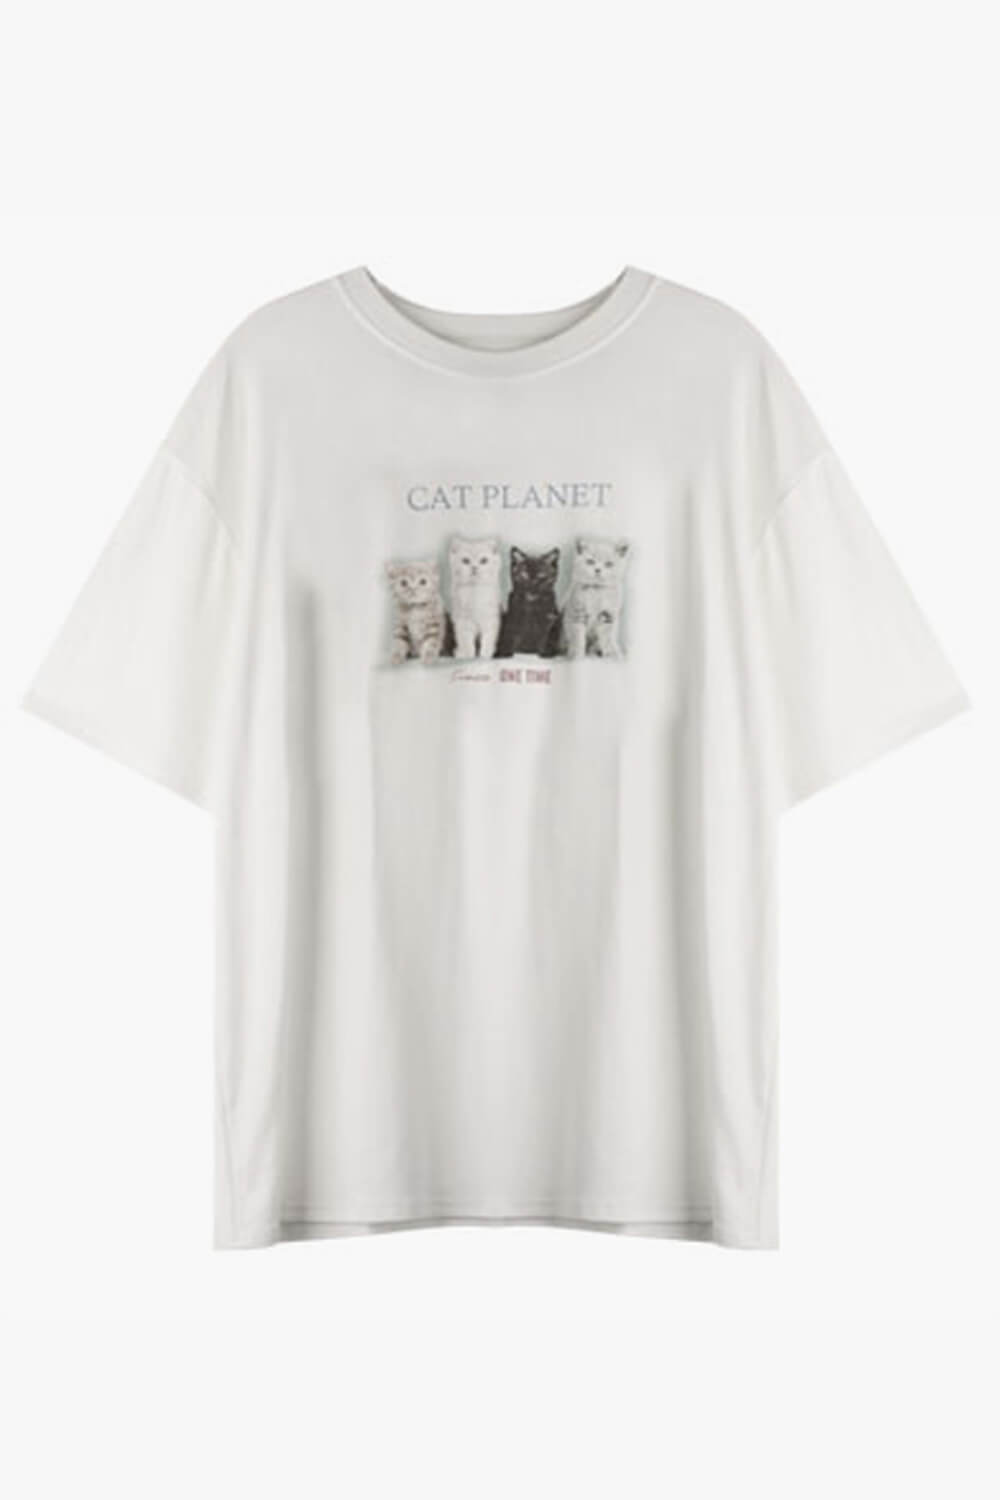 Cat Planet Aesthetic T-Shirt